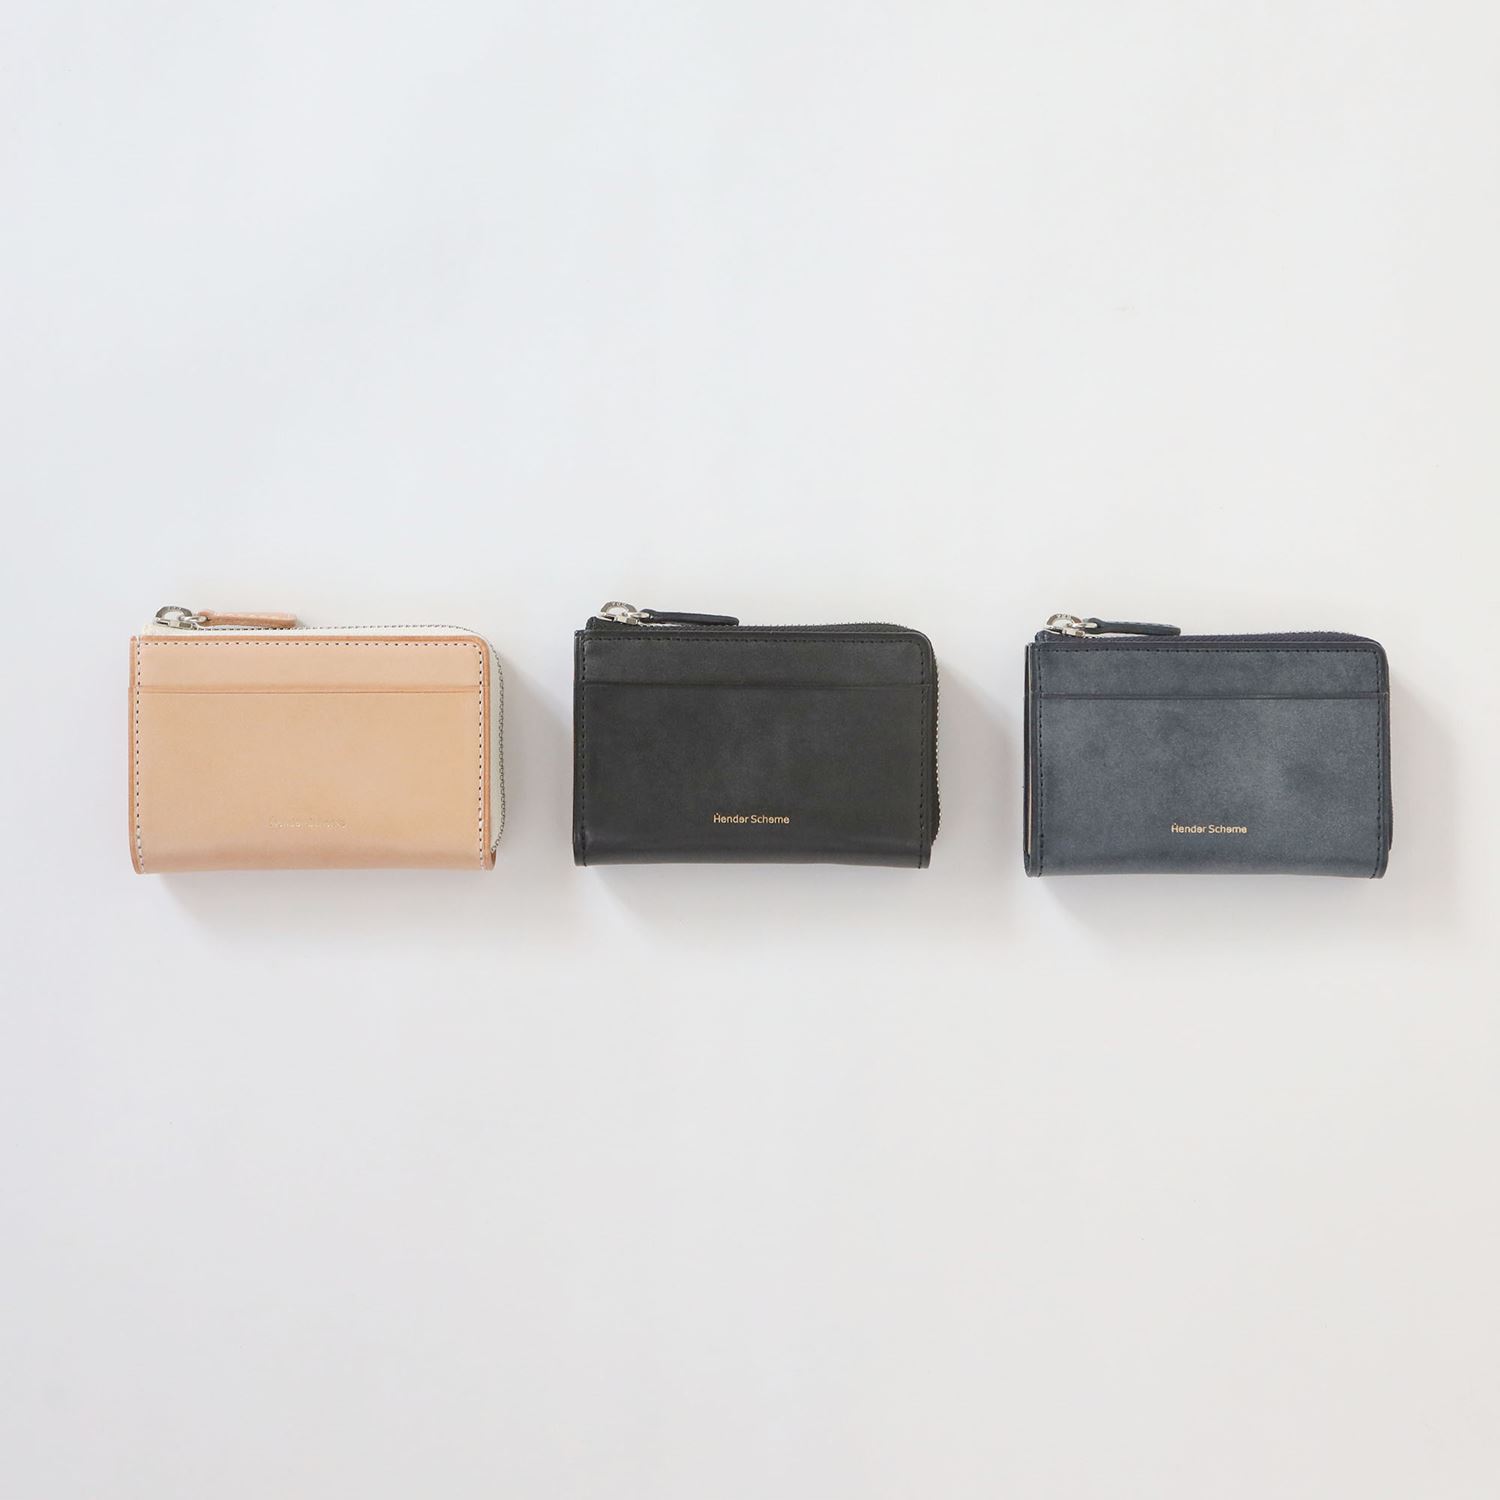 Hender Scheme エンダースキーマ mini purse 財布Lジップの財布です